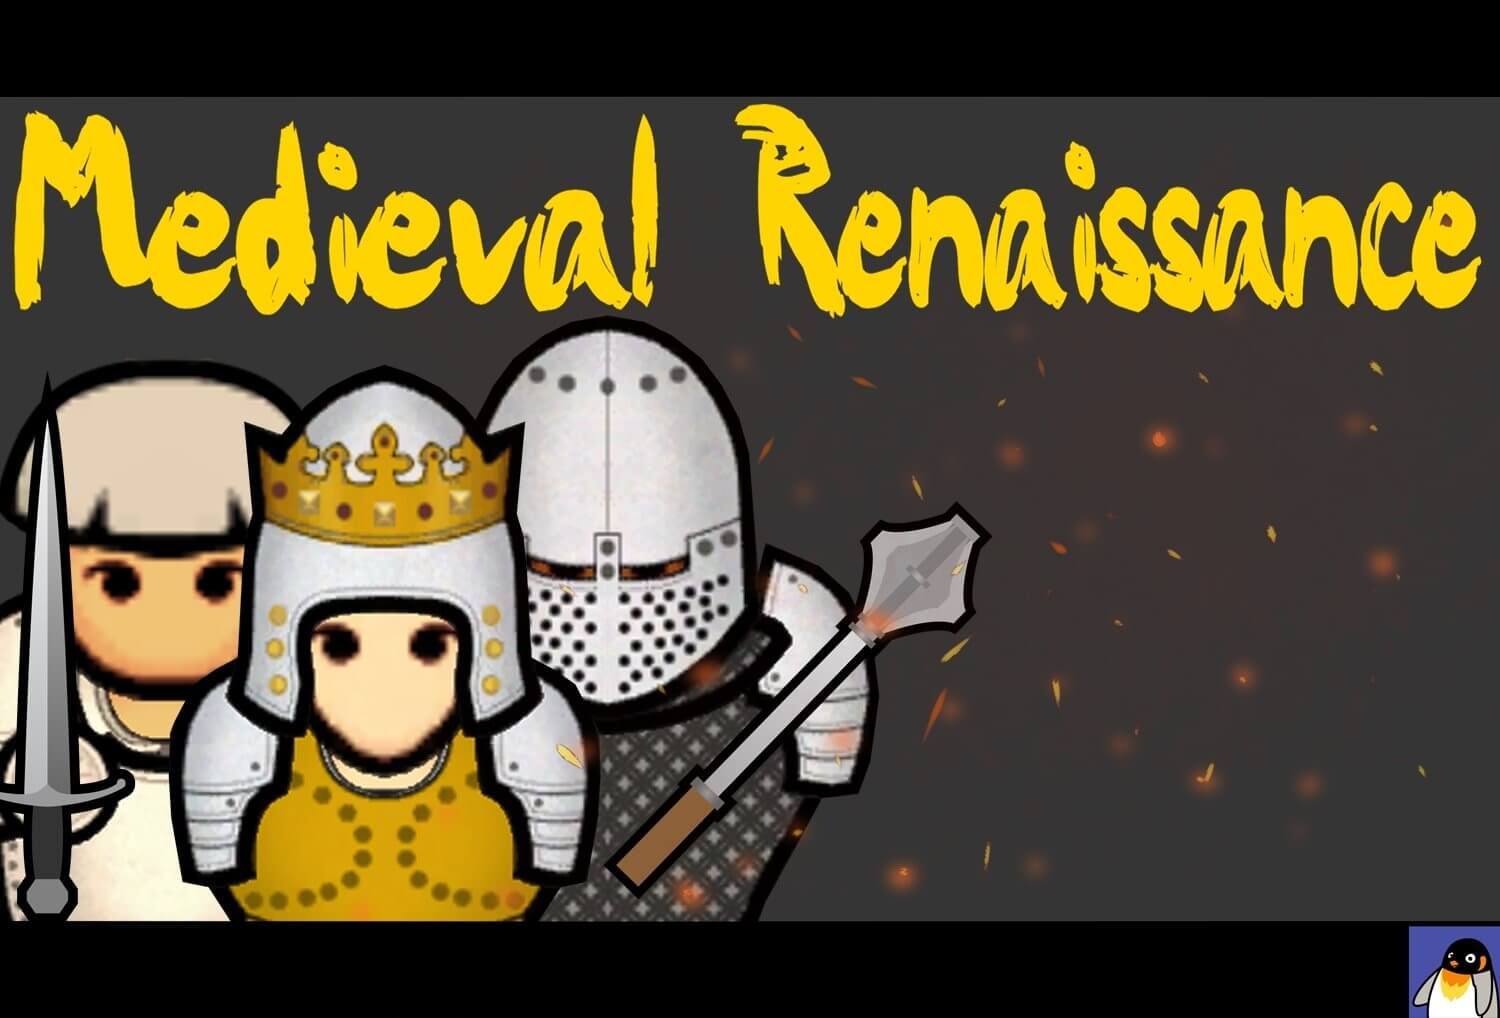 Medieval Renaissance (1.2)